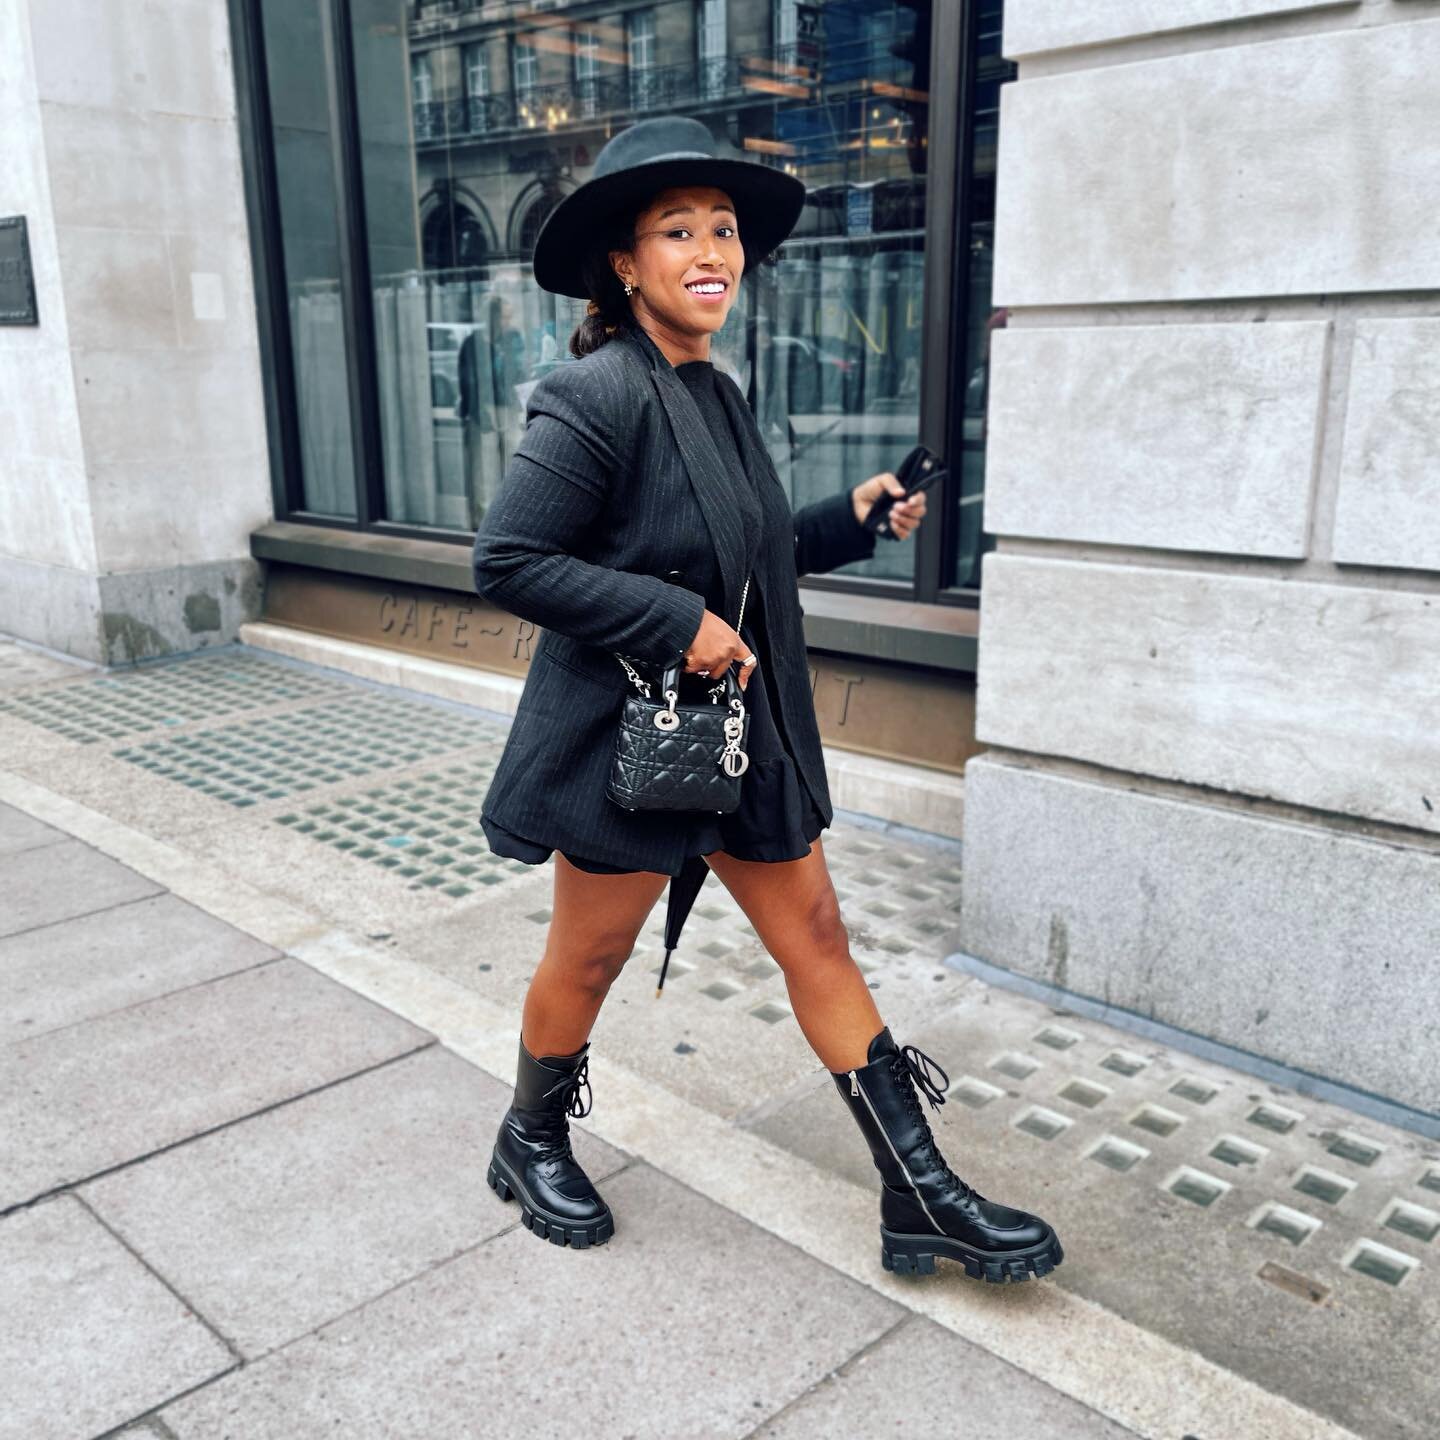 These boots were made for walking (and to be my obsession) 
&bull;
&bull;
&bull;
&bull;
&bull;
#LuxuryFashion #ChristianDior #MiniLadyDior #Prada #PradaBoots #PradaMonolithBoots #BlackWomenInLuxury #LuxuryFashionDaily #LuxuryLiving #LondonLife #regen